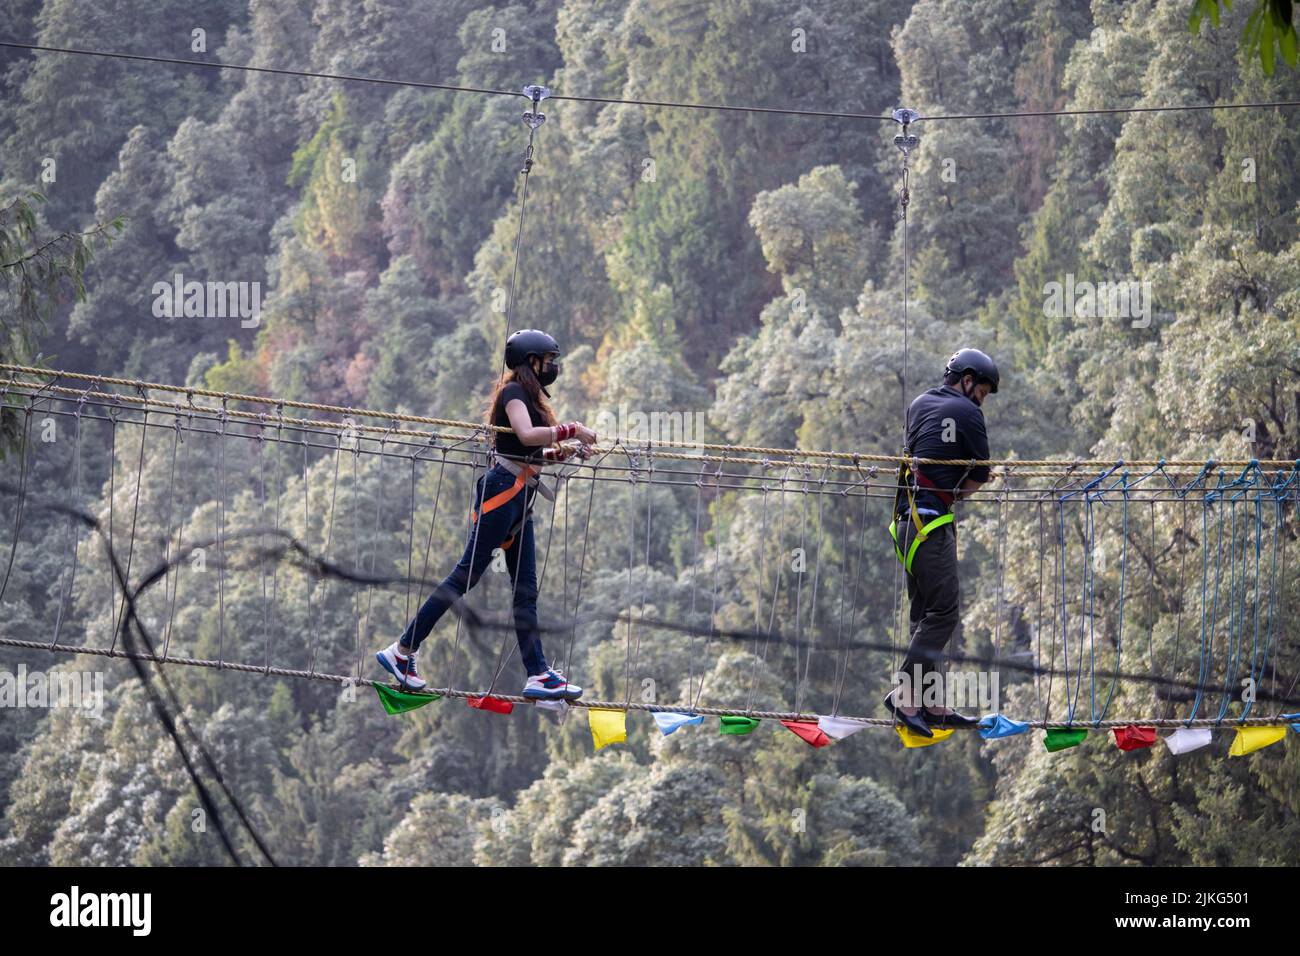 Panchpulla, Dalhousie, Himachal Pradesh, India - May 21st 2022: Tourists enjoying zip lining adventure sport Stock Photo